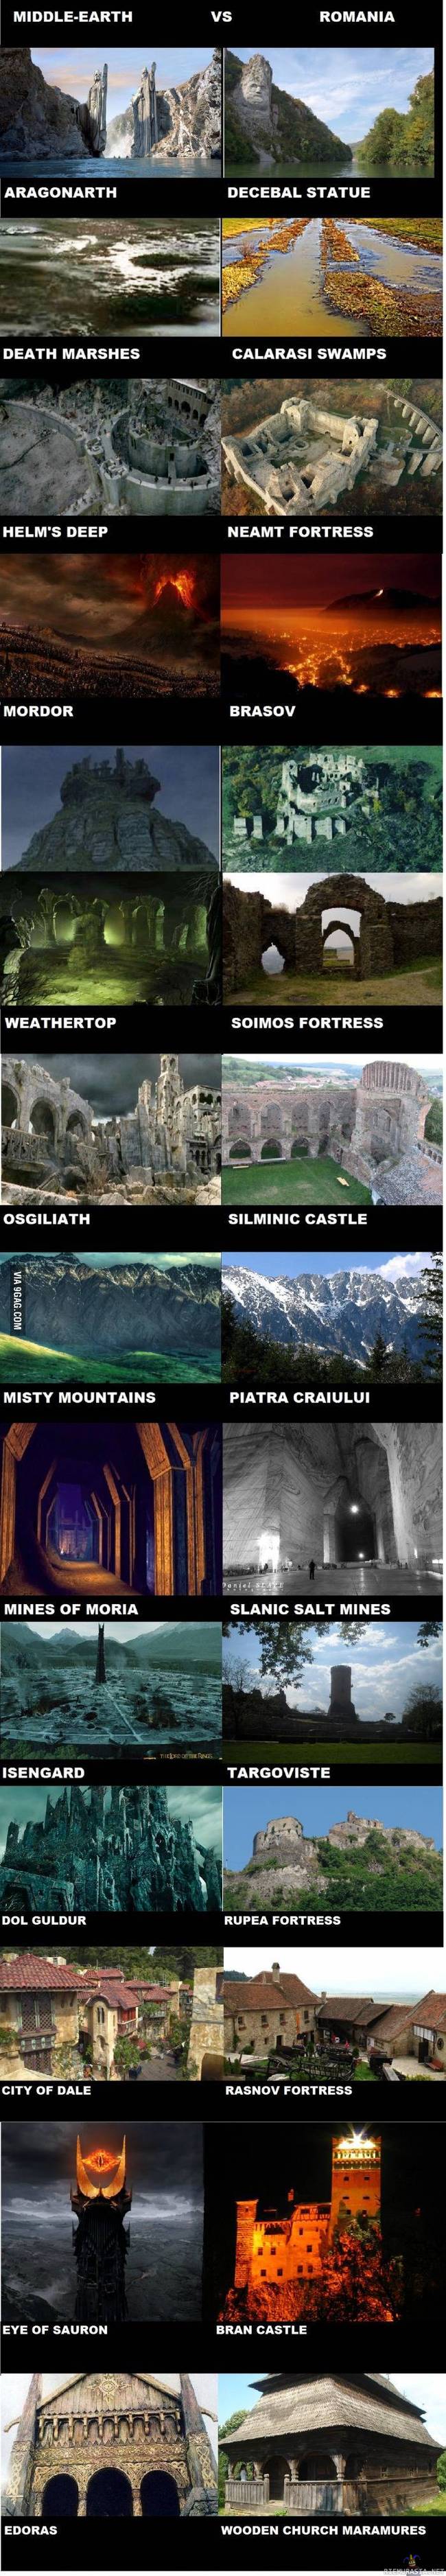 Romania vs. Middle-earth